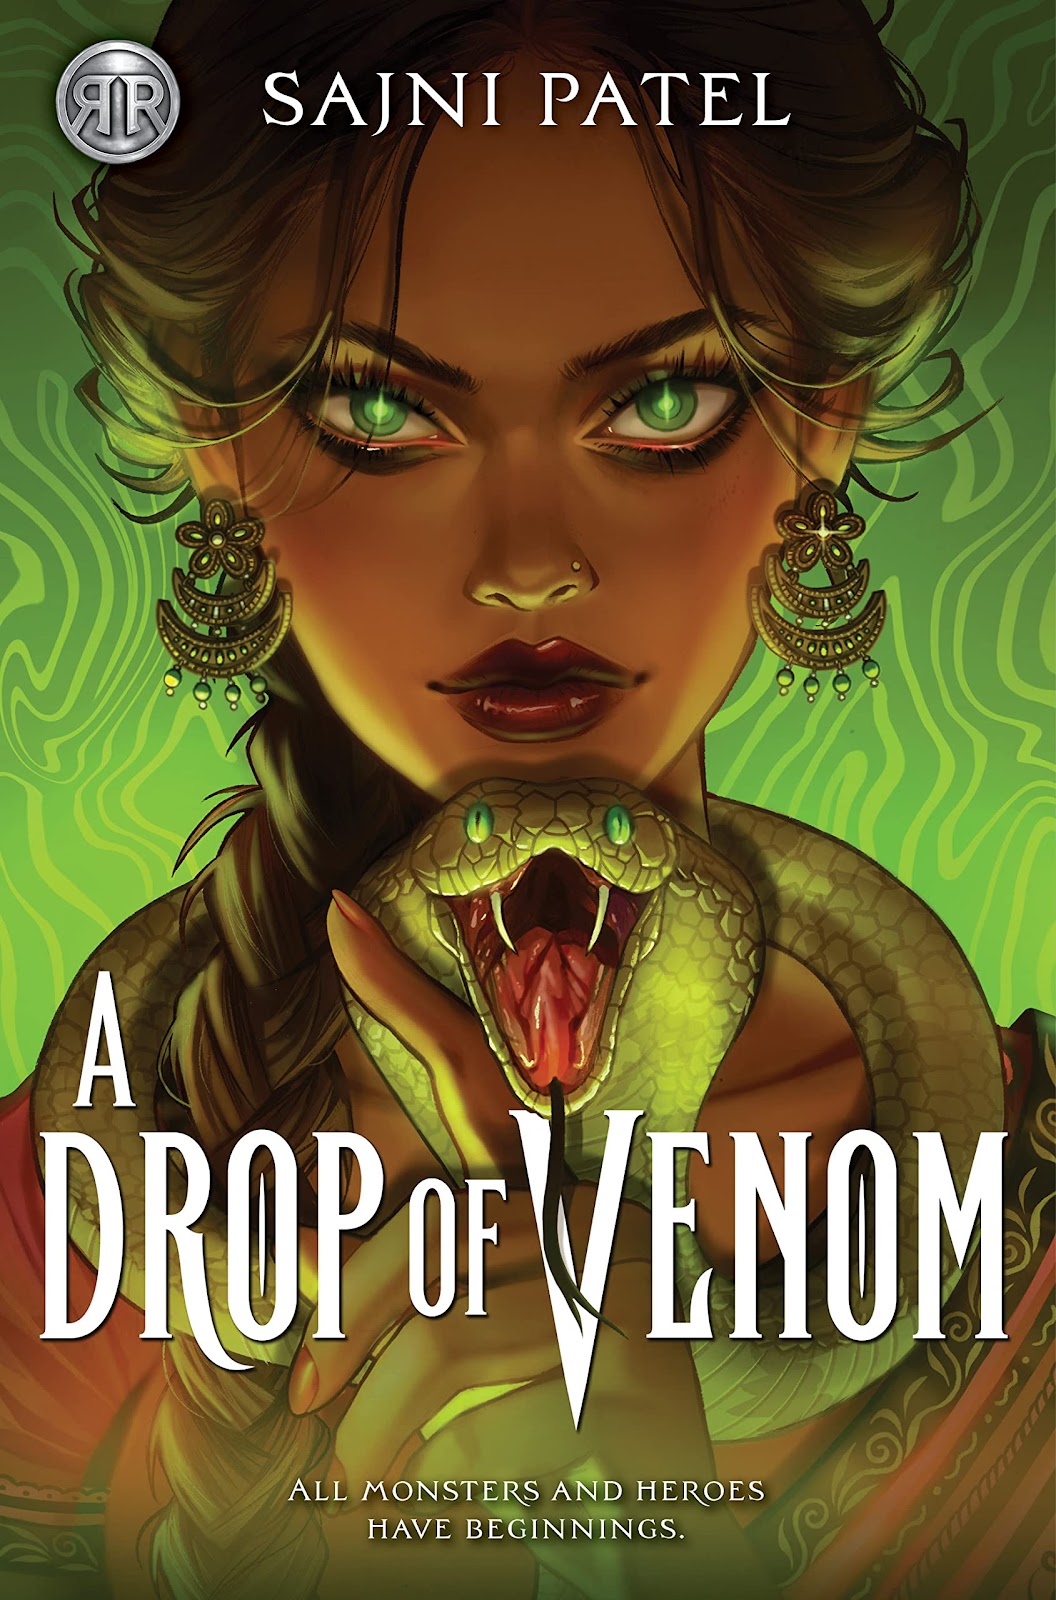 A Drop of Venom by Sajni Patel